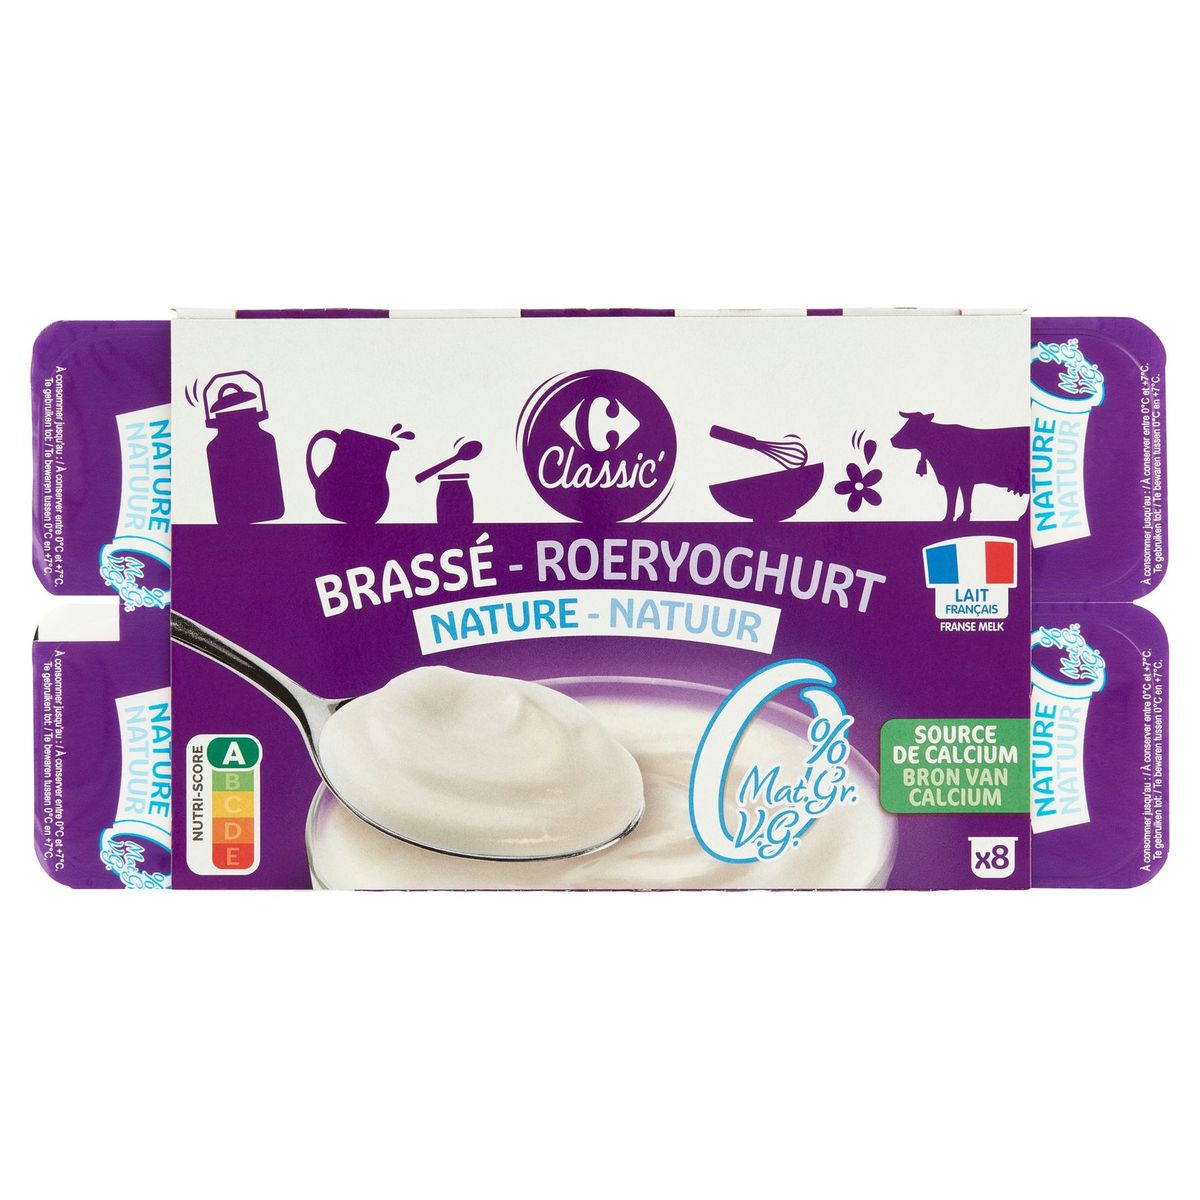 Carrefour Classic' Roeryoghurt Natuur 0% V.G. 8 x 125 g